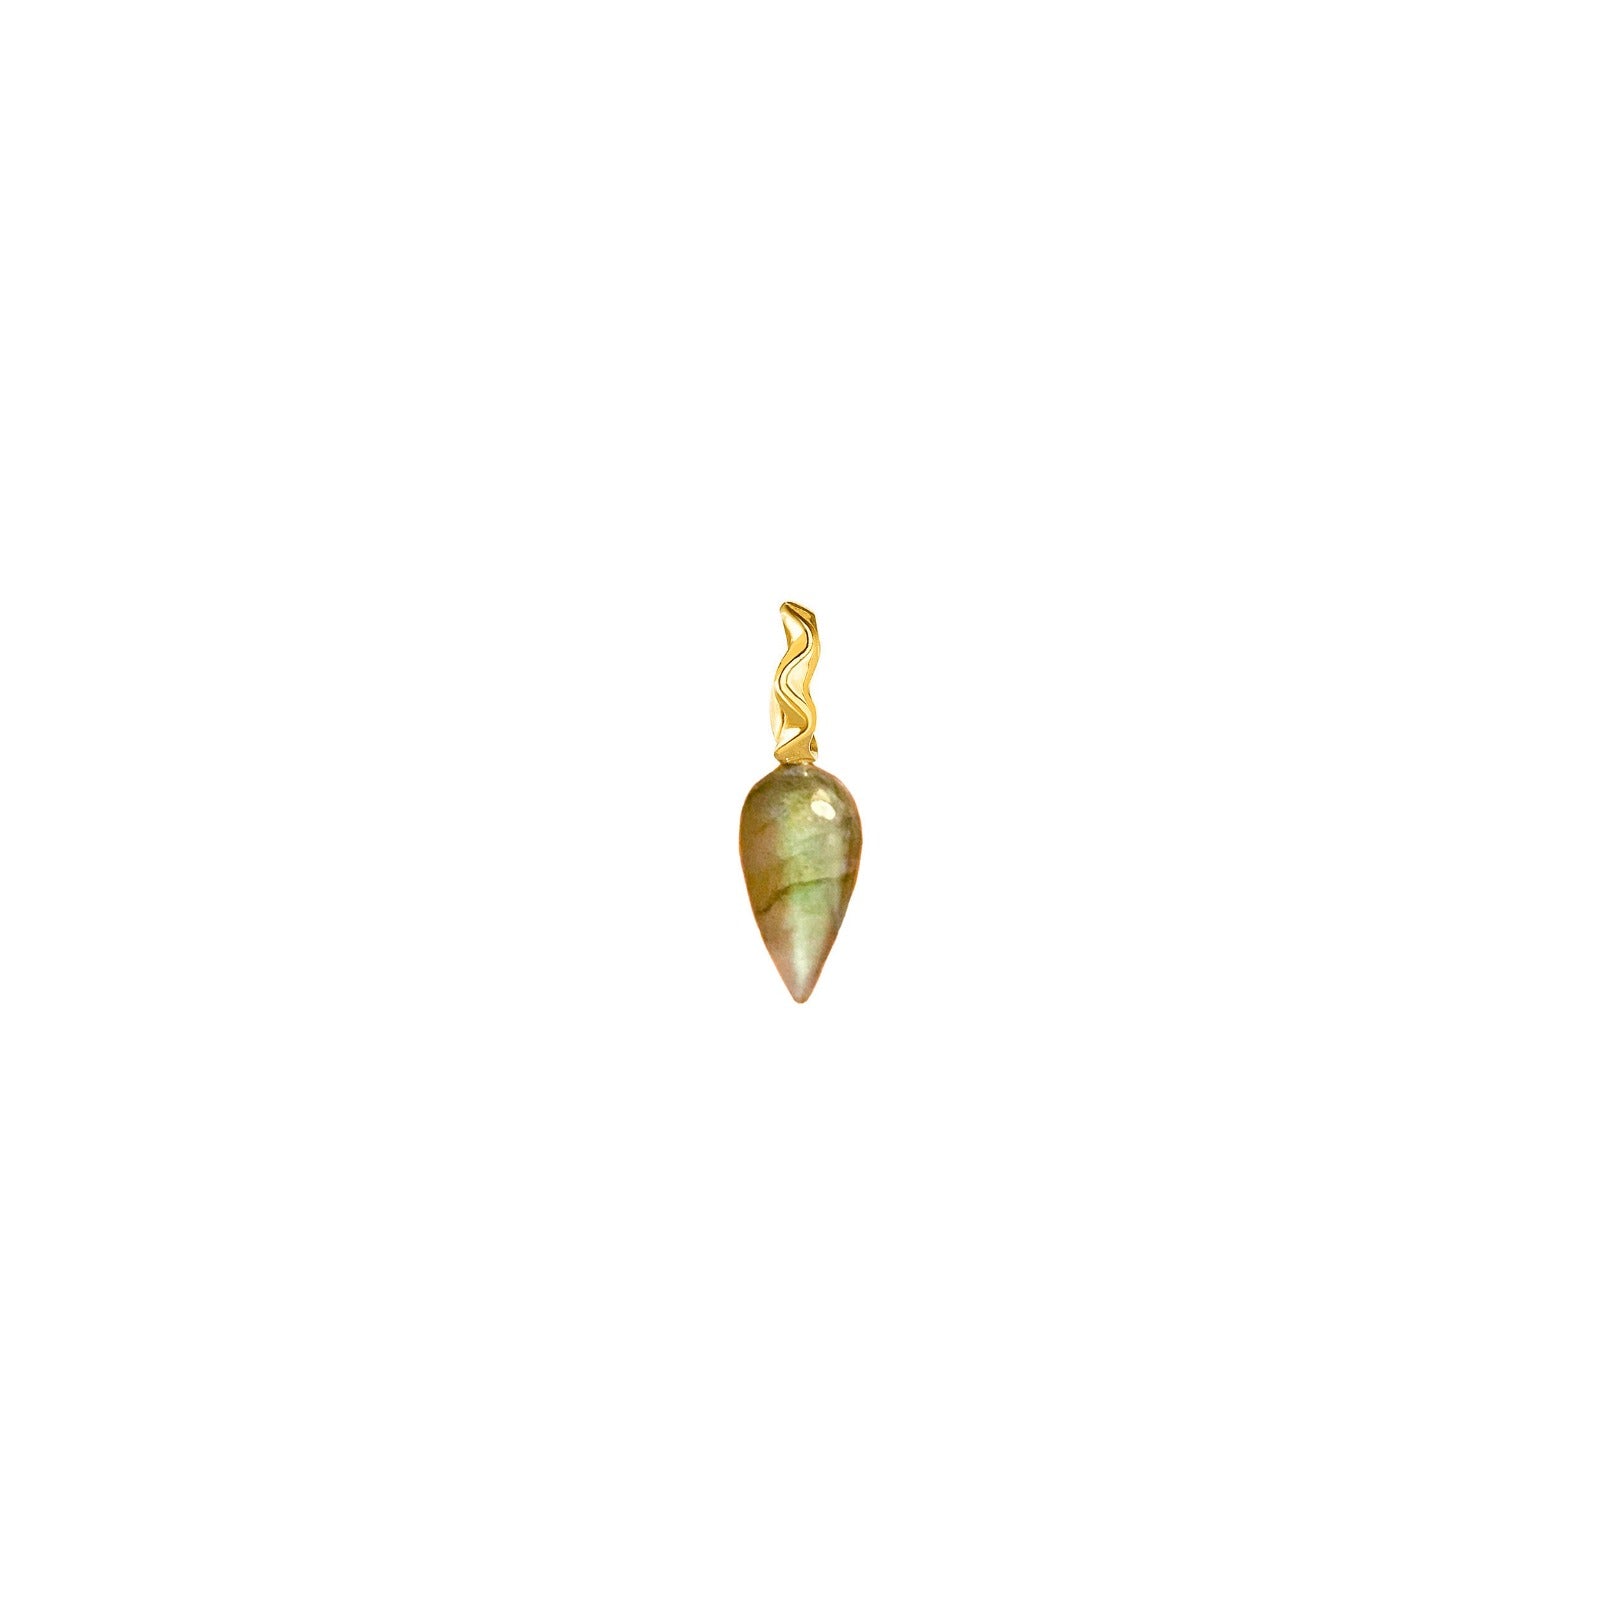 Labradorite acorn drop charm with 14k gold bail